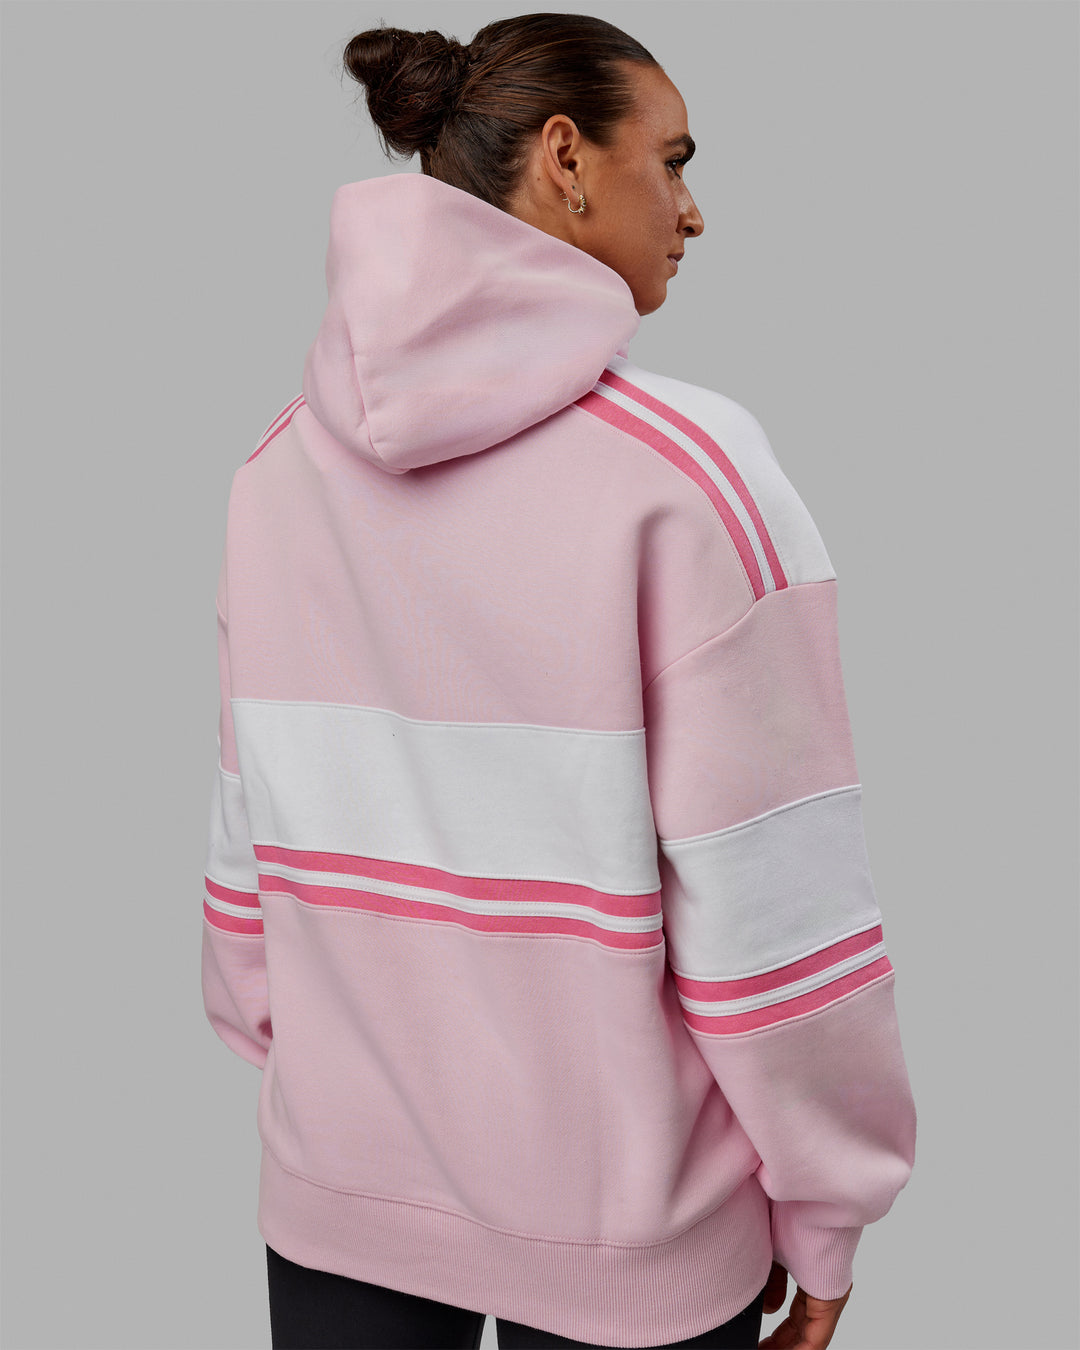 Woman wearing Unisex A-Team Hoodie Oversize - Petal Pink-White